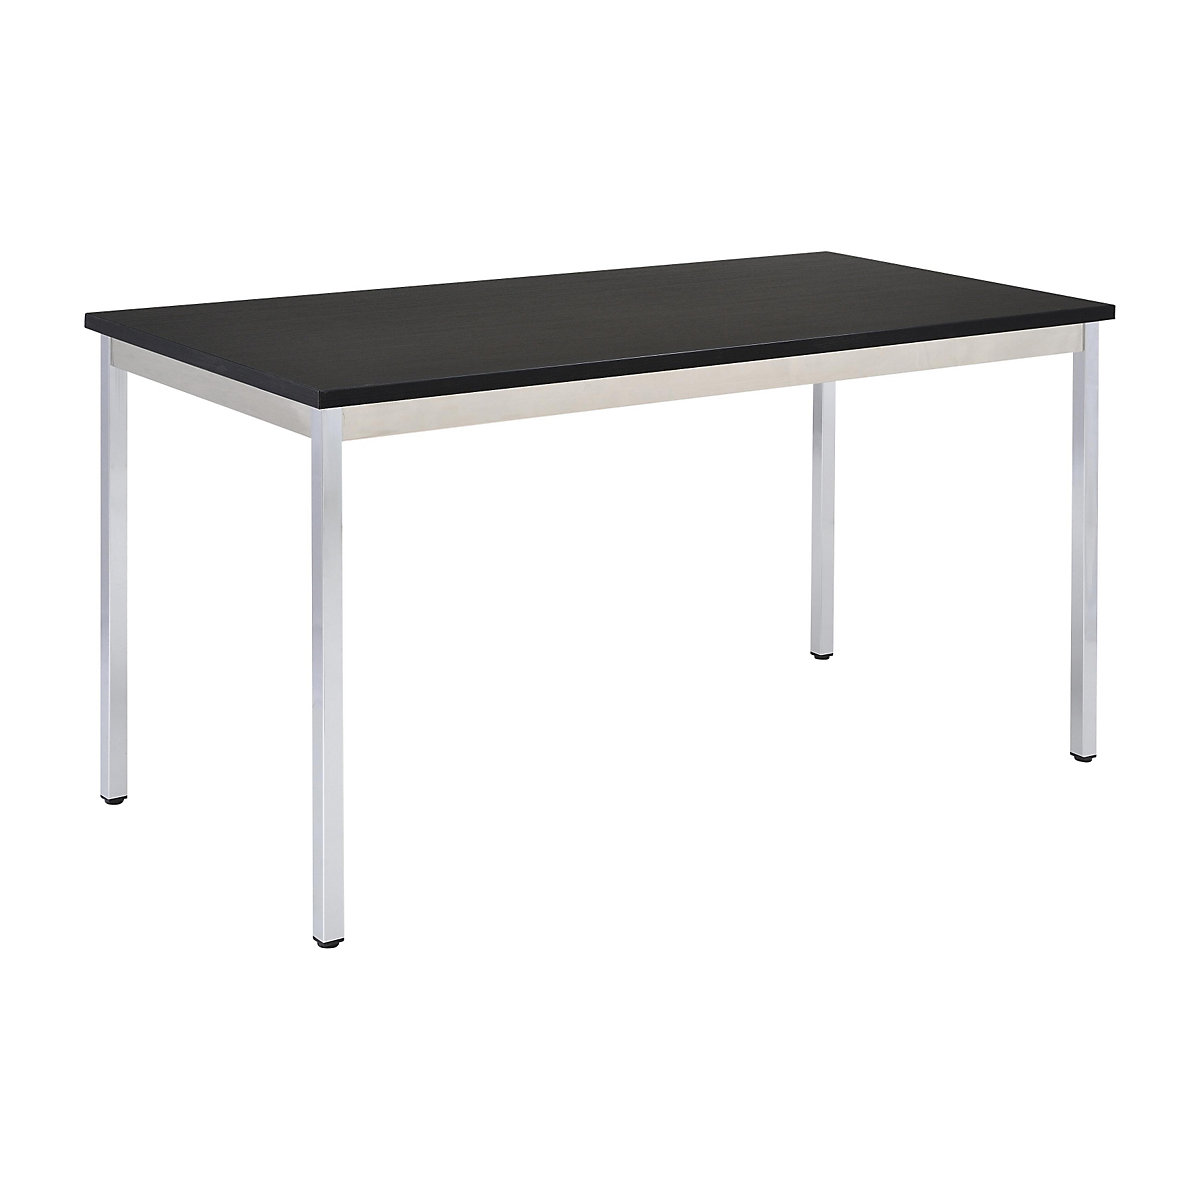 Universele tafel – eurokraft basic, rechthoekig, h x b x d = 740 x 700 x 600 mm, blad zwart, frame verchroomd